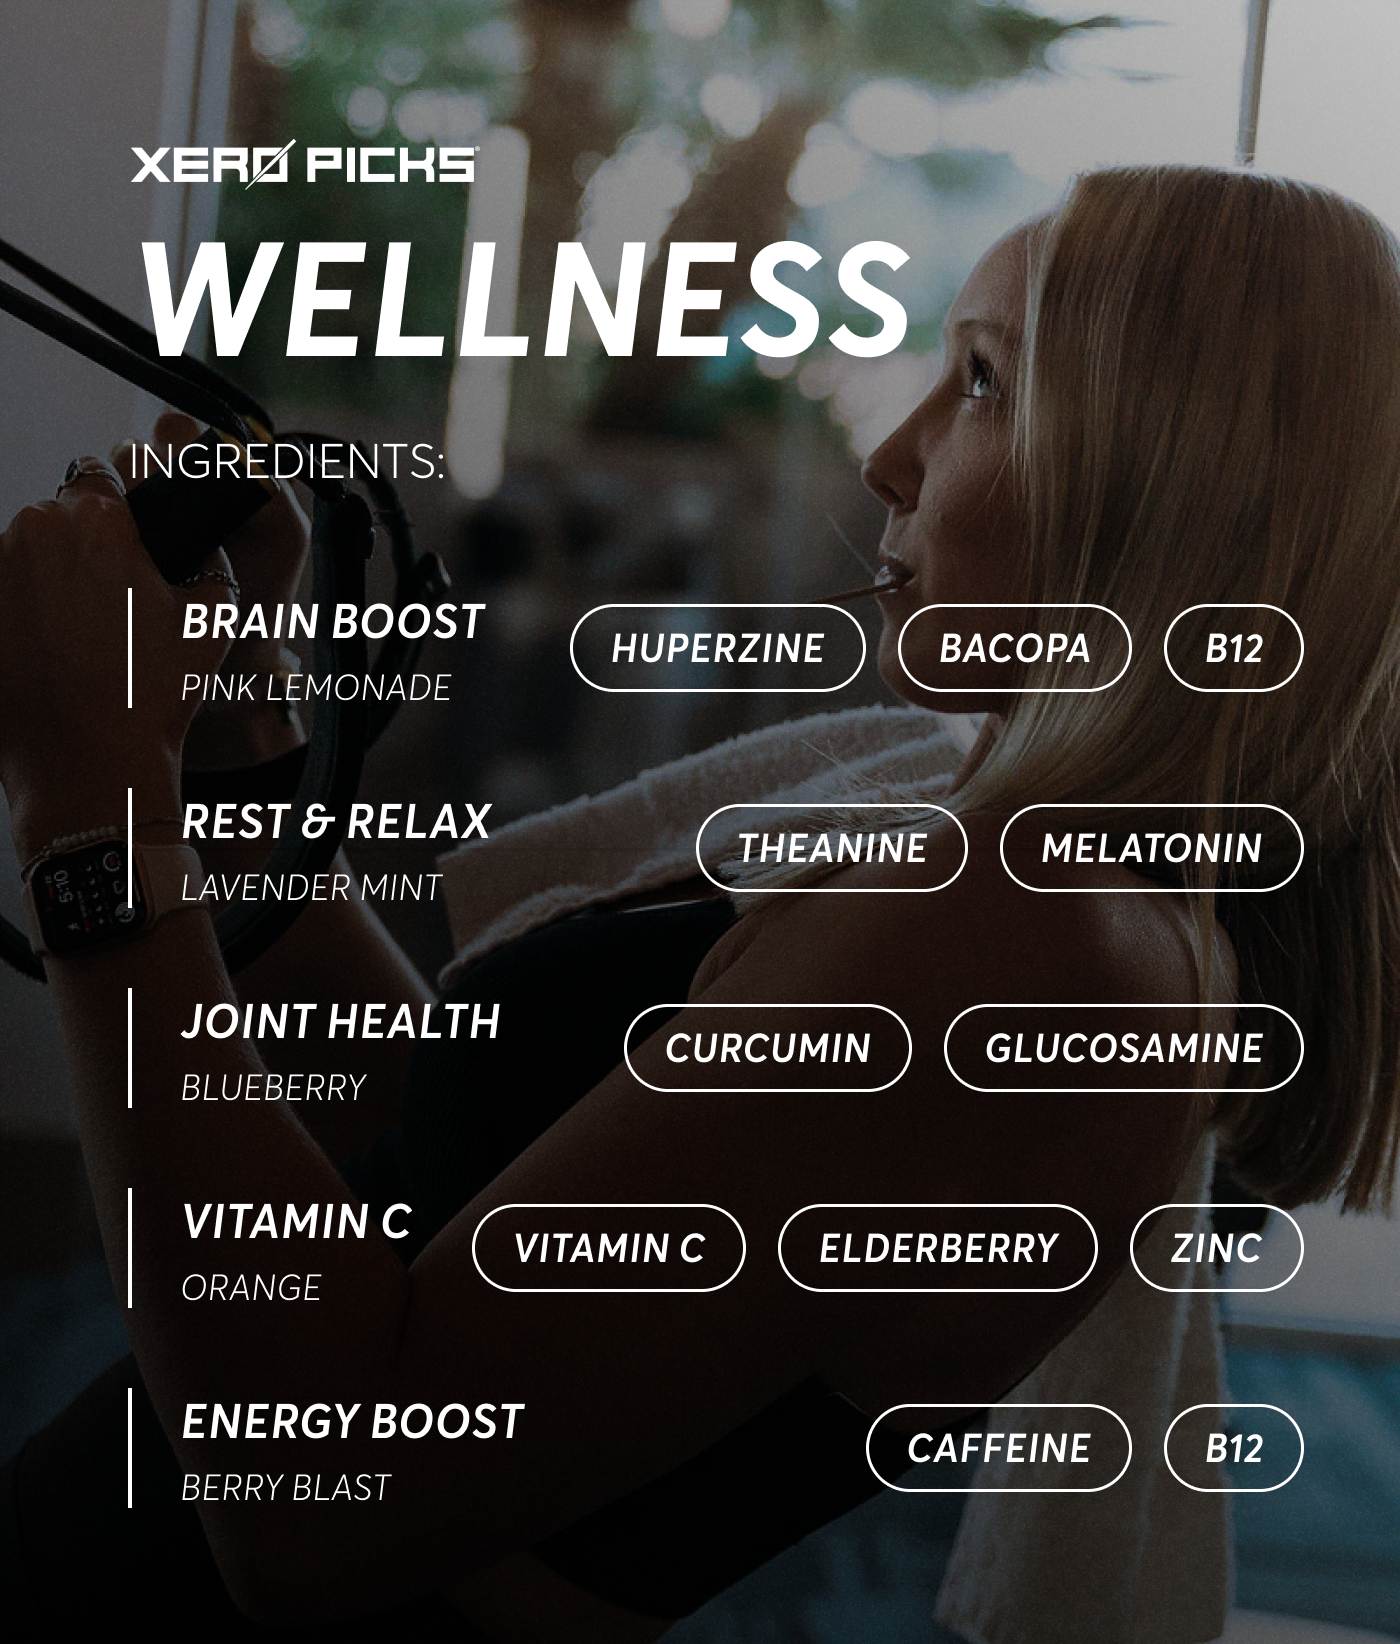 Xero Picks Wellness - Energy Boost - Berry